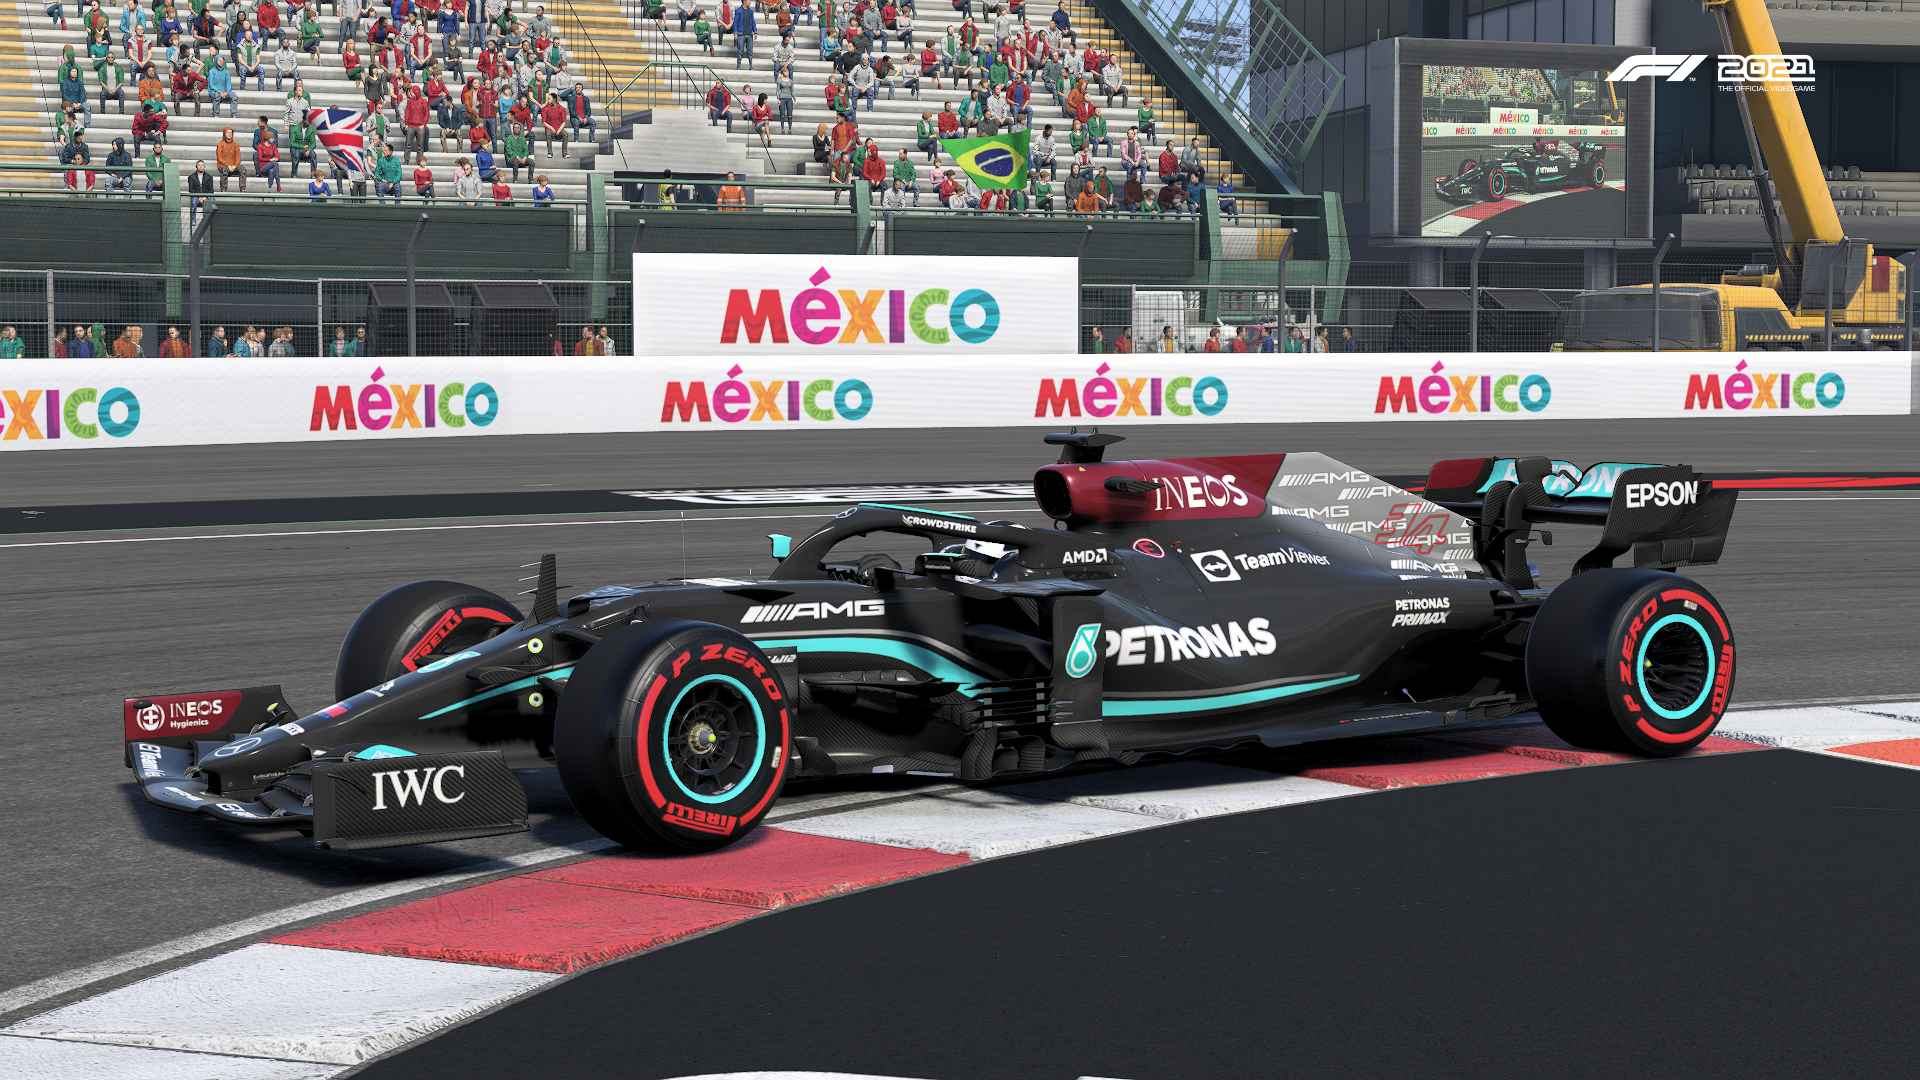 F1 2021 Mexico Mercedes Pic 1